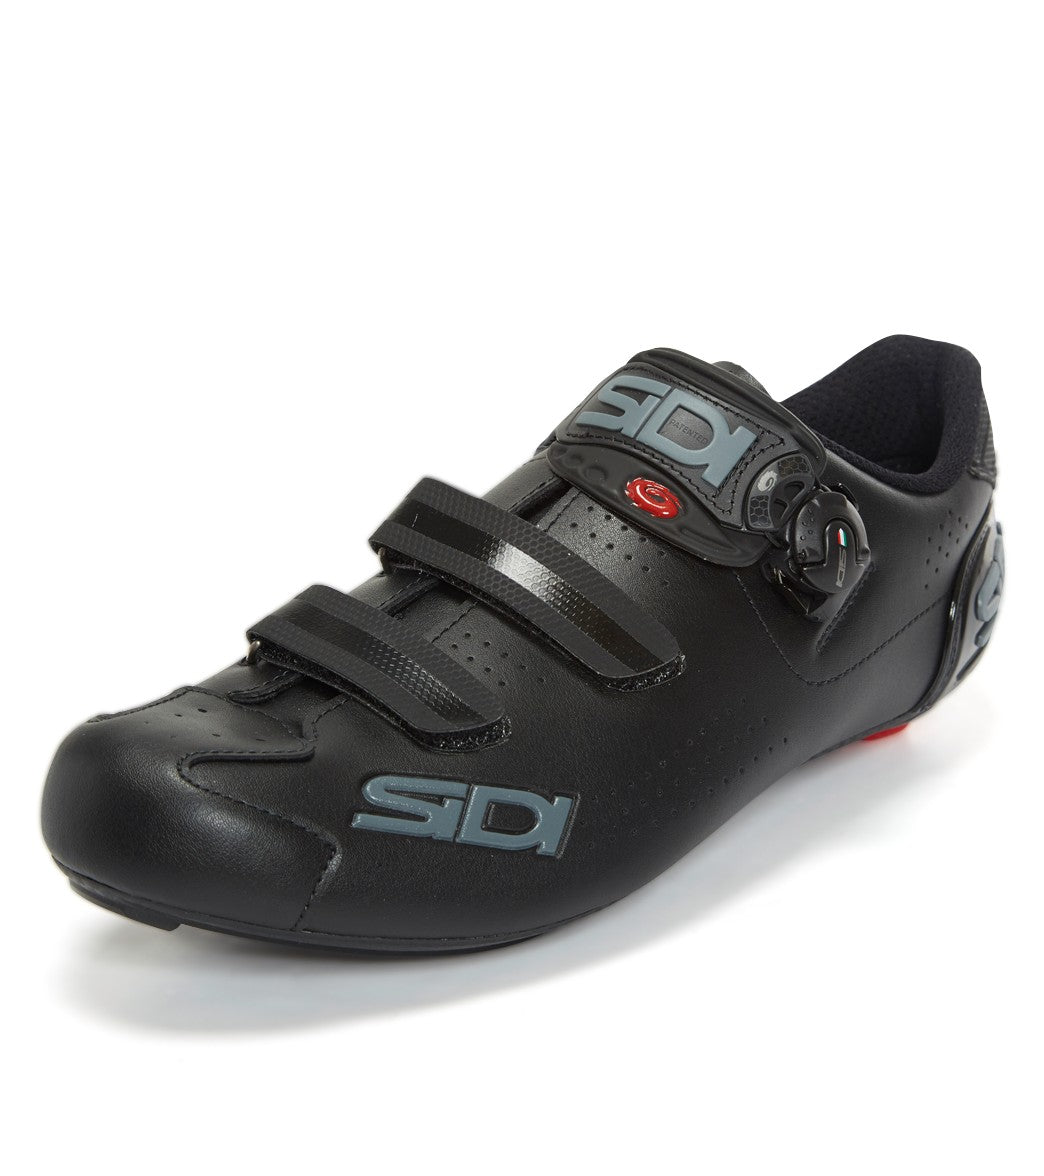 SIDI Men's Alba 2 Tri Cycling Shoes at SwimOutlet.com